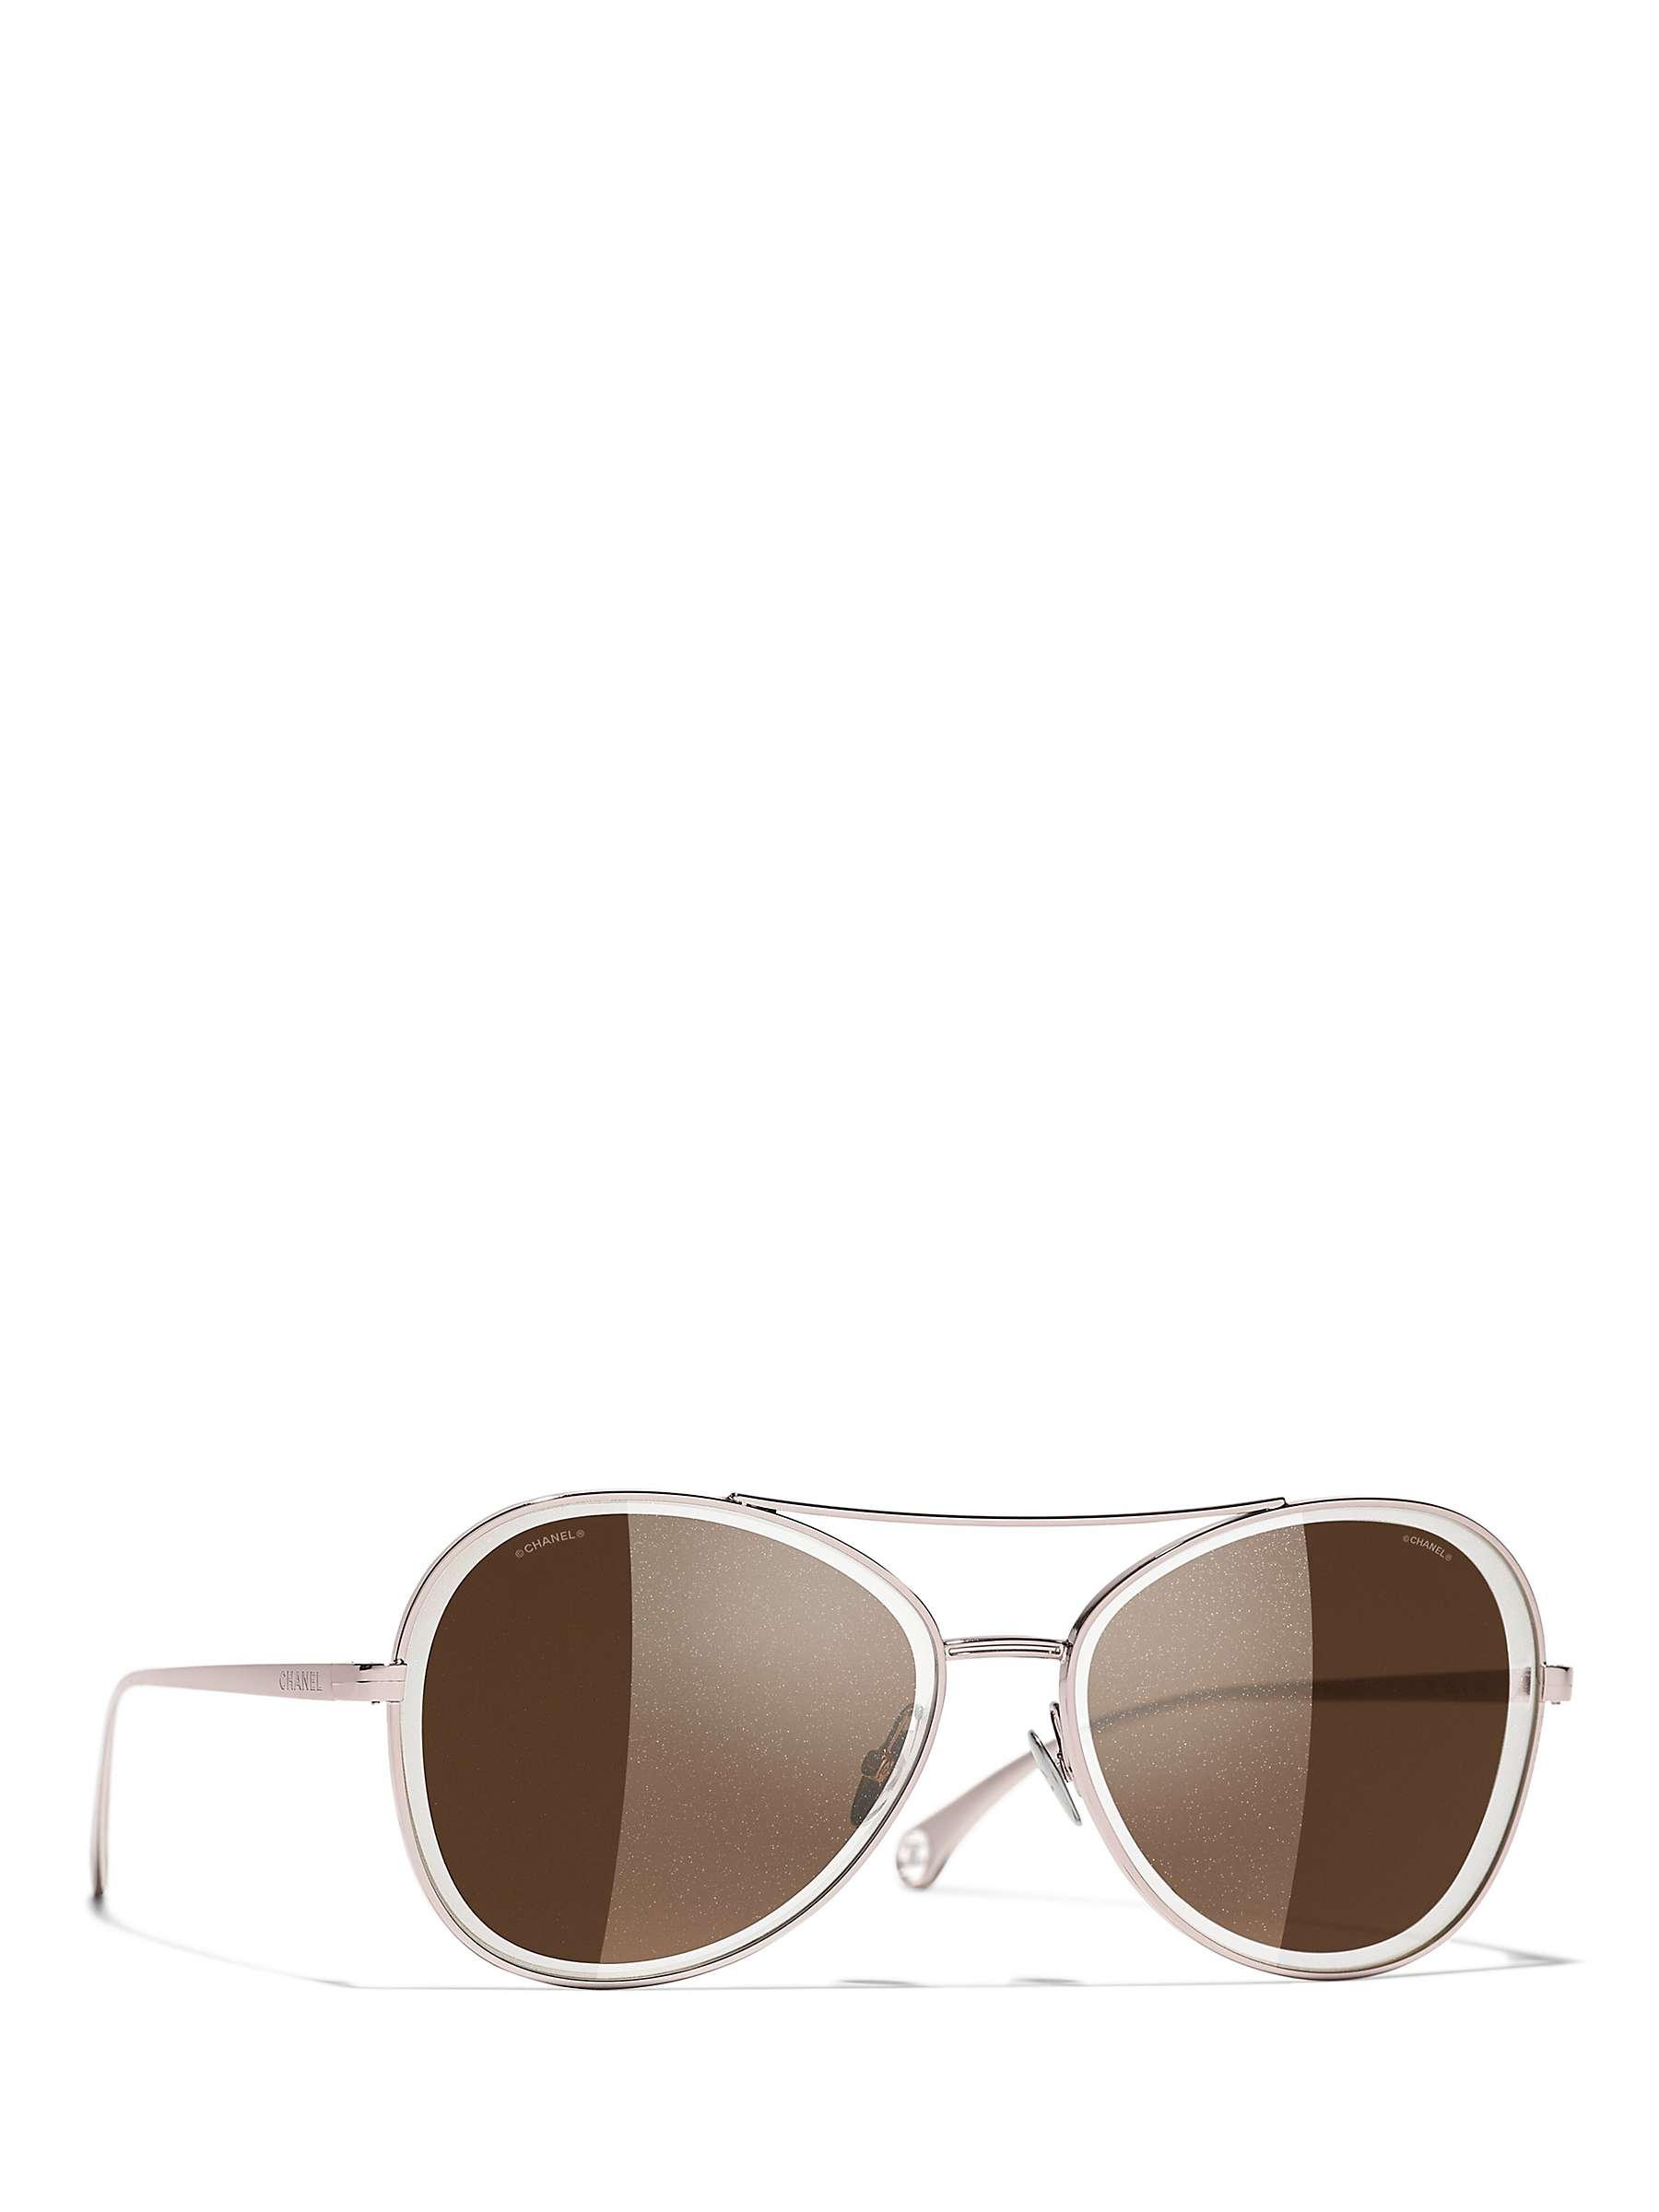 Buy CHANEL Pilot Sunglasses CH4260, Light Pink Online at johnlewis.com